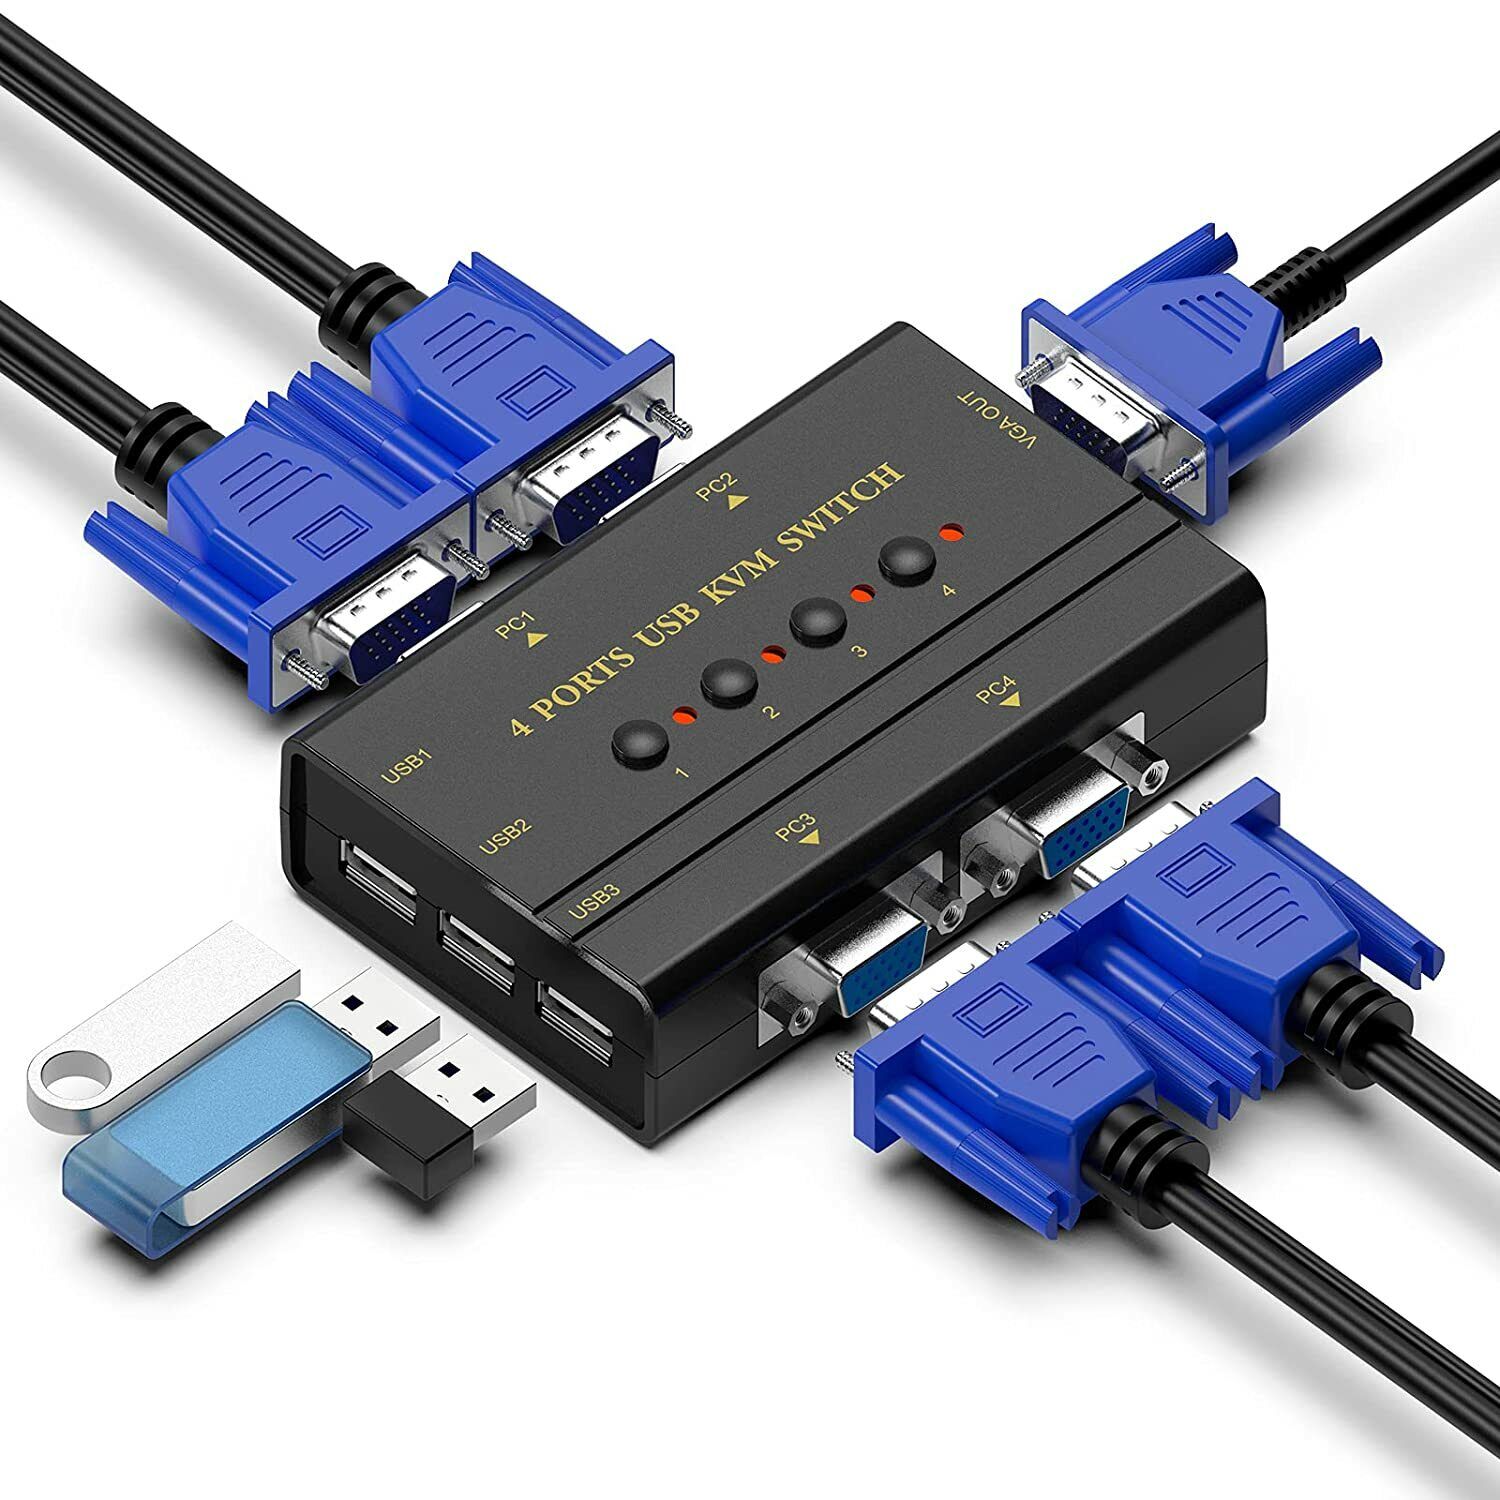 VGA KVM Switch 4 Port with USB Hub, KVM Switch for 4PC Sharing VGA monitor